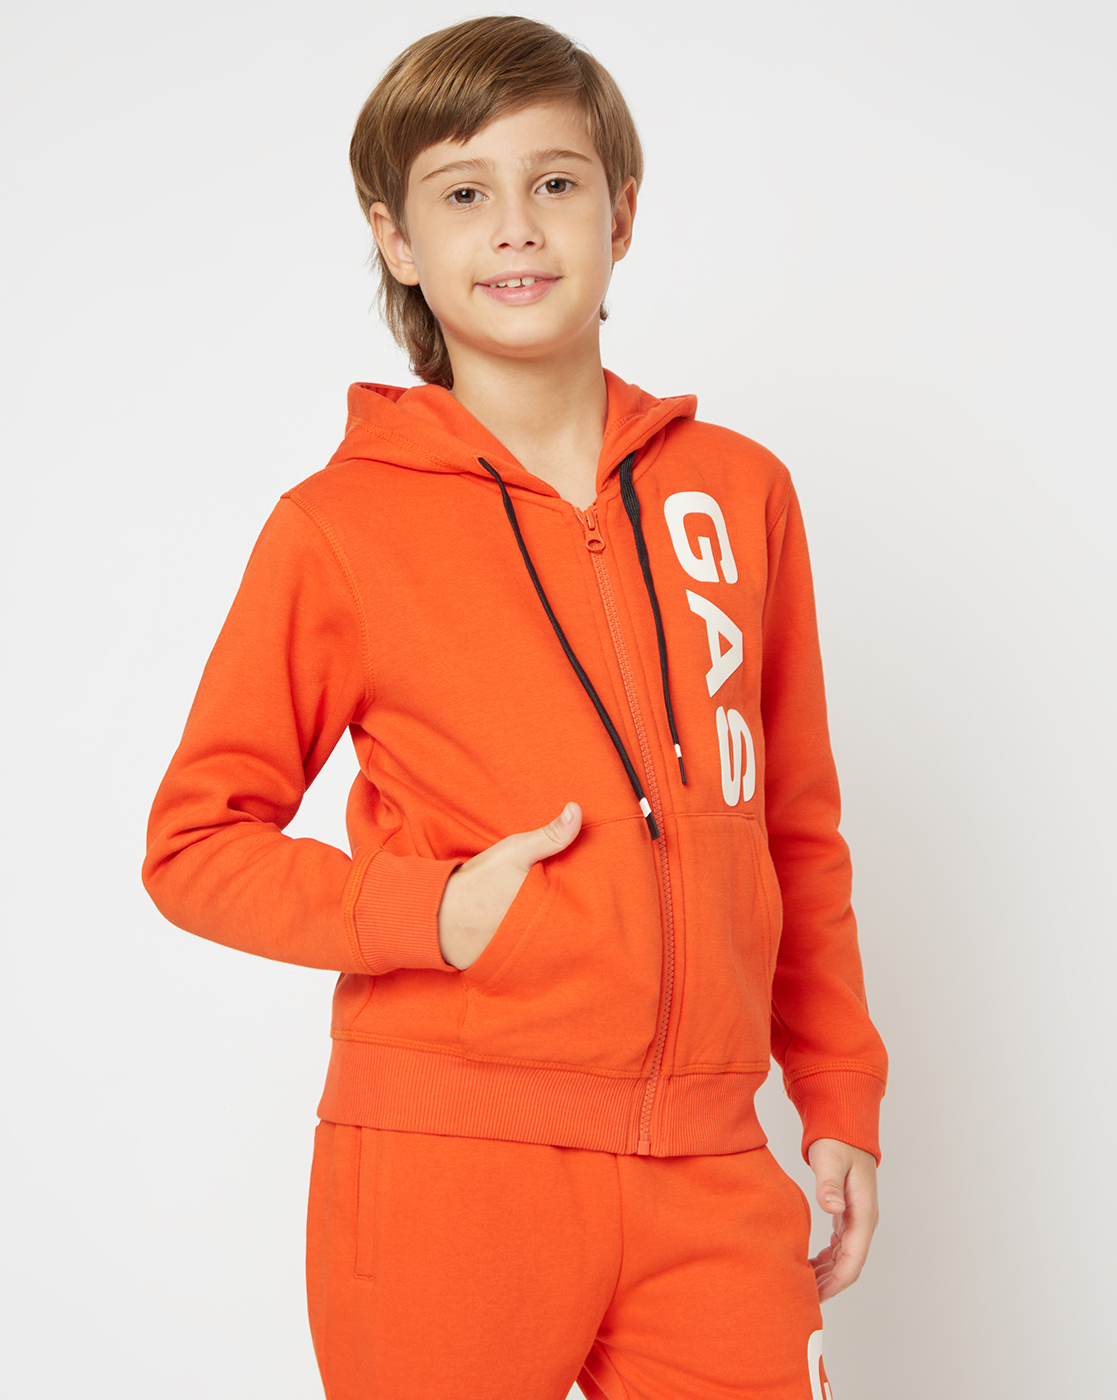 Gas Kids Boys Orange Printed Sweatshirt